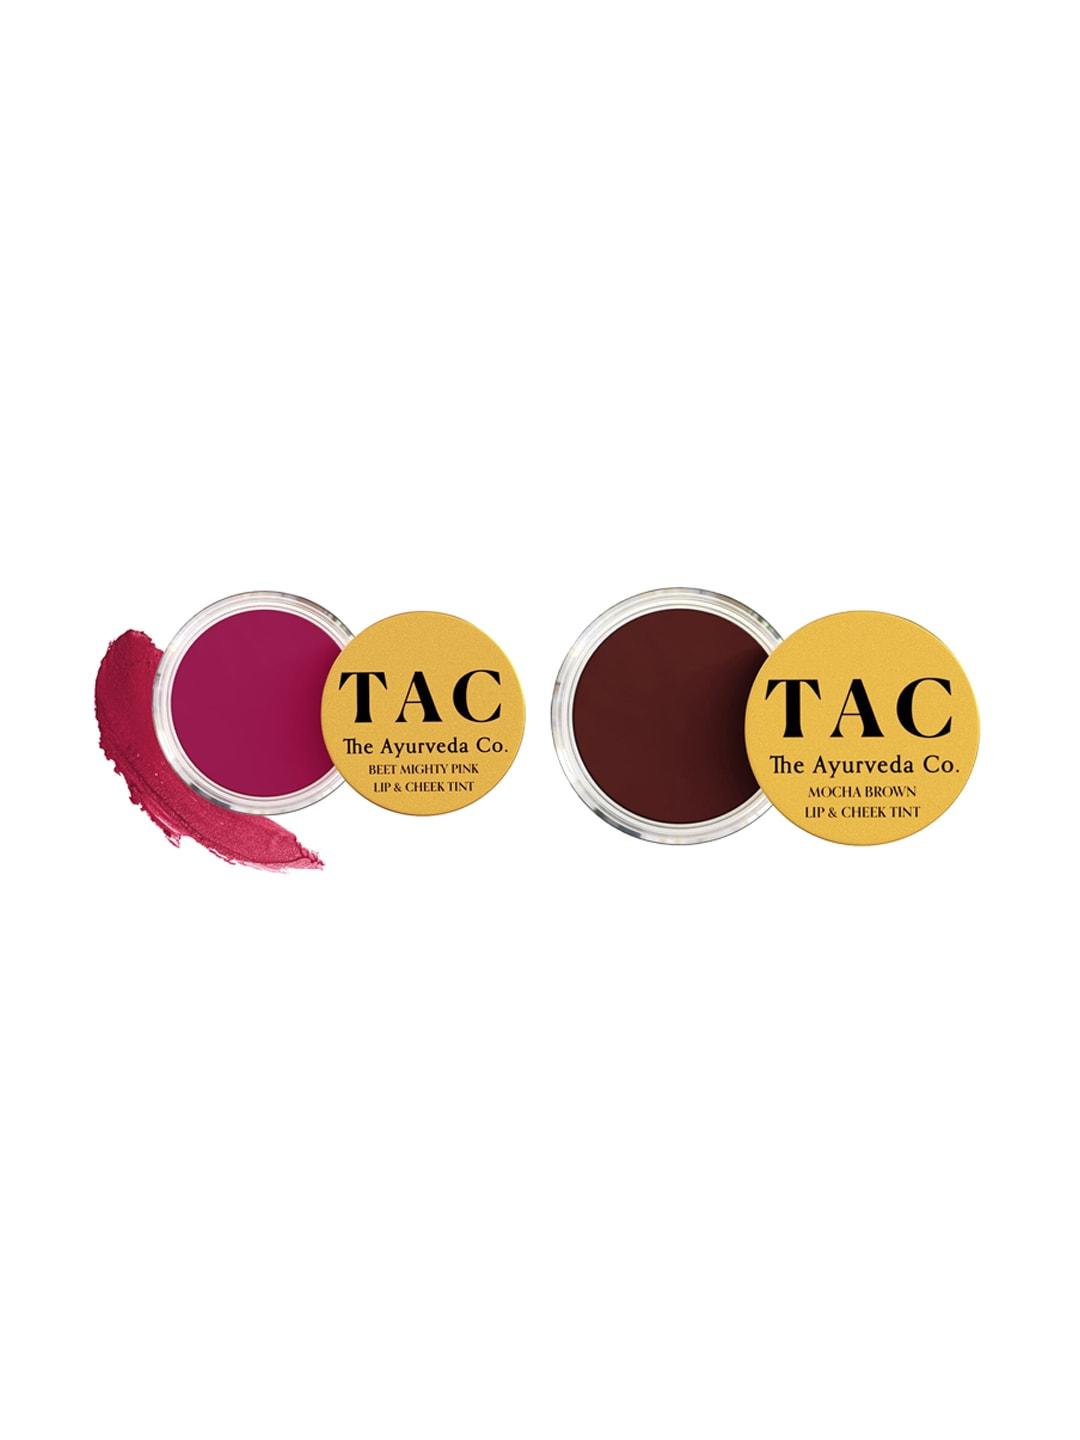 TAC - The Ayurveda Co. Set of 2 Lip & Cheek Tint - Beet Mighty Pink & Mocha Brown